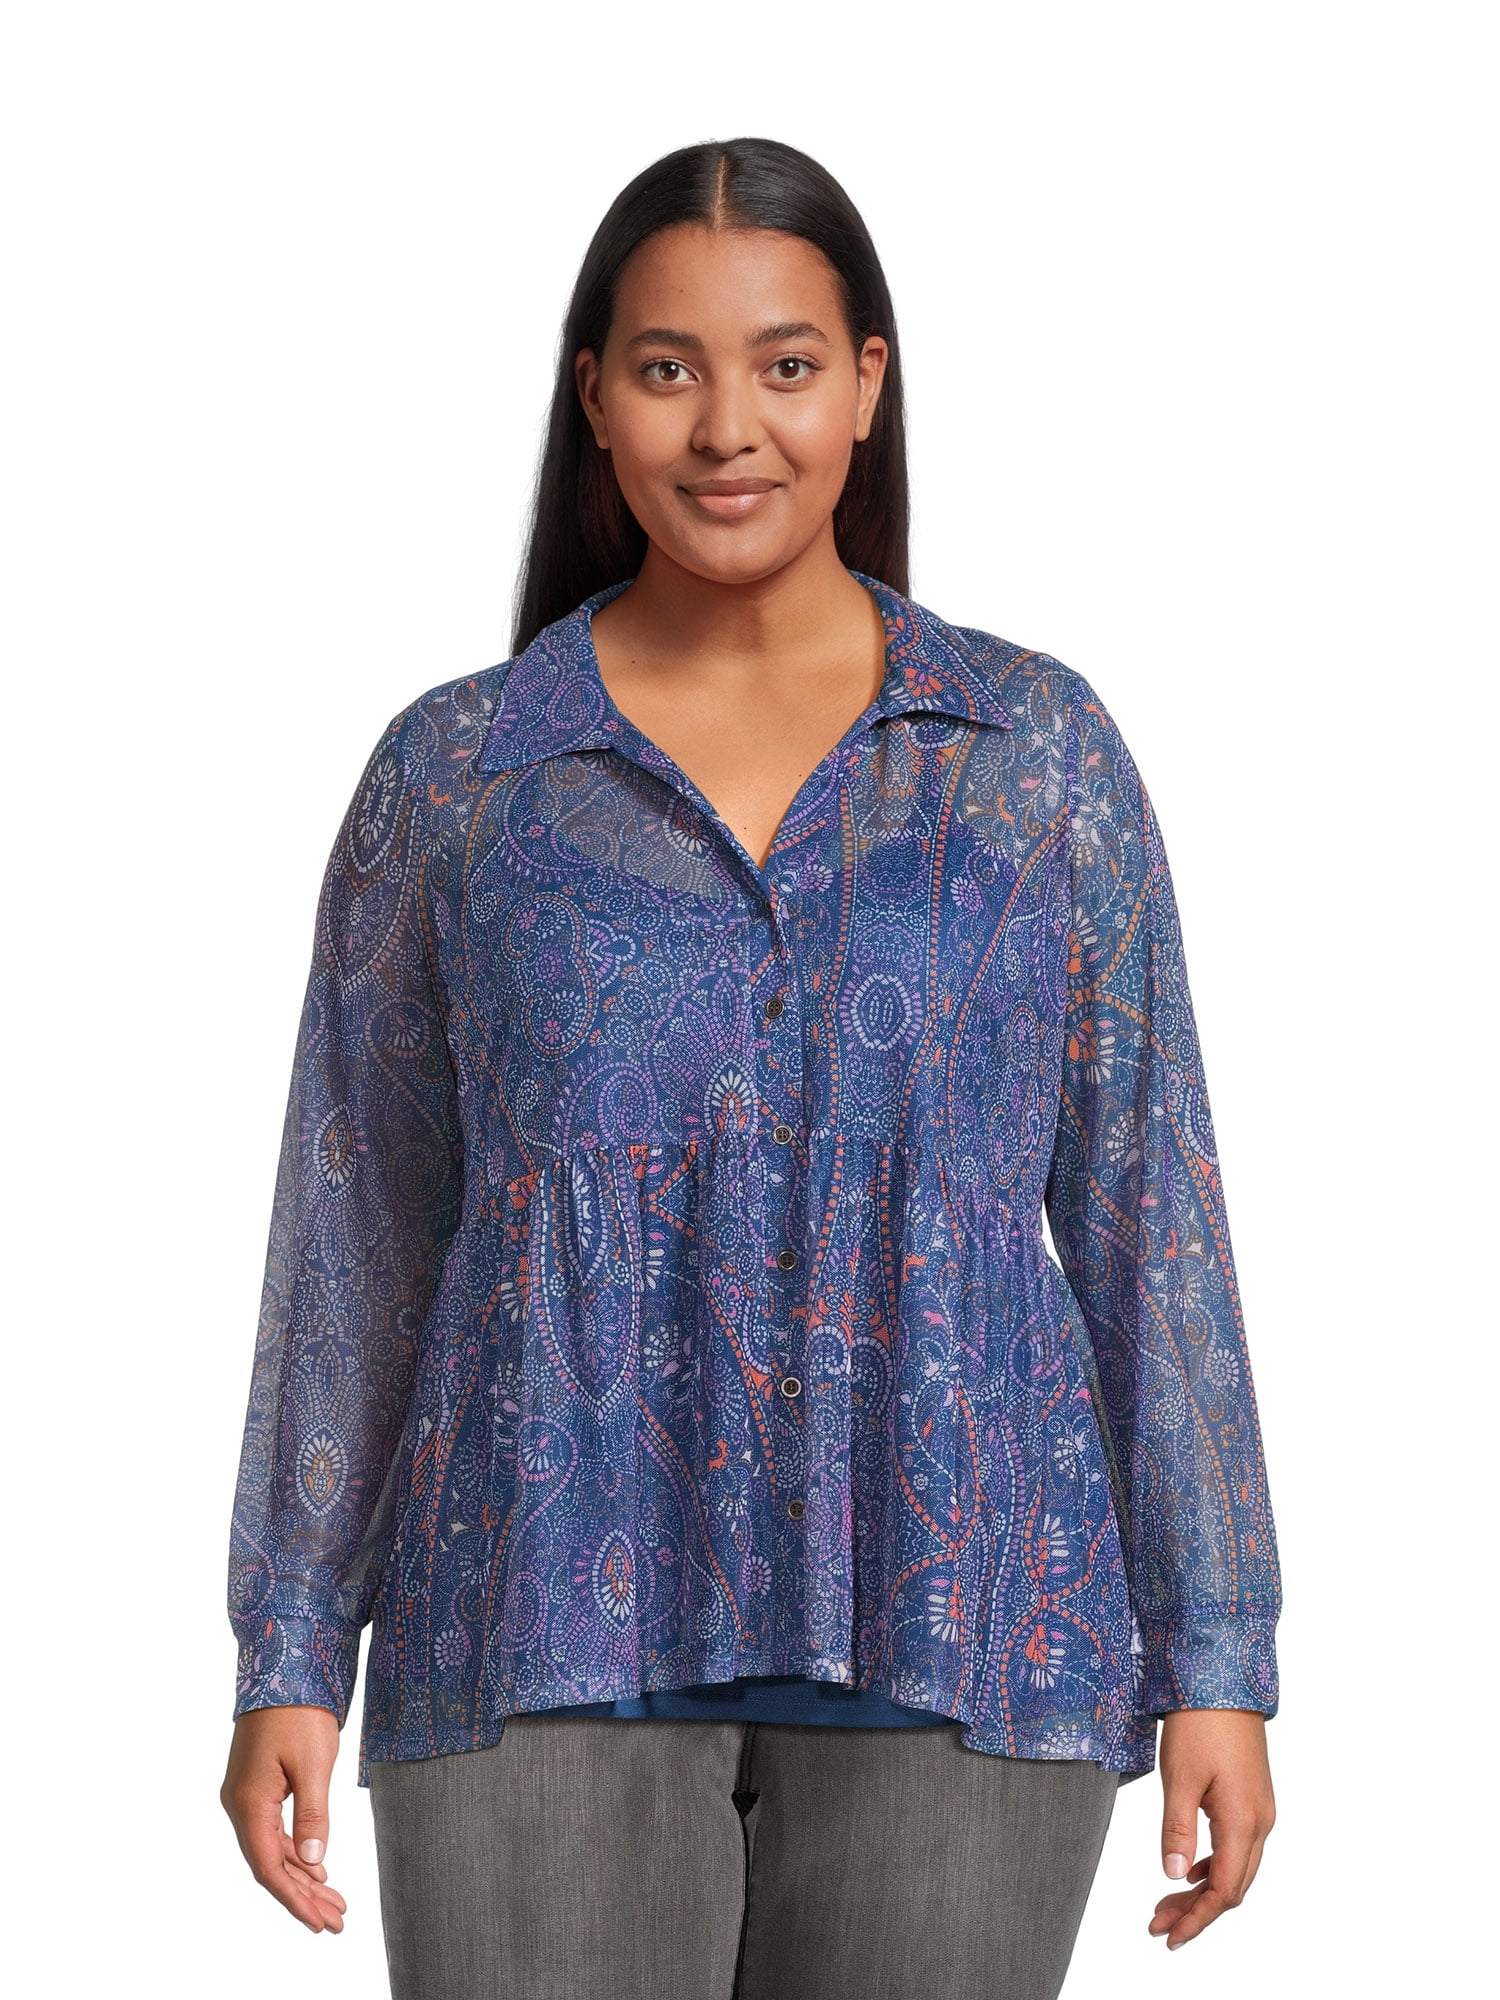 Terra & Sky Women’s Plus Size Print Mesh Top with Cami - Walmart.com